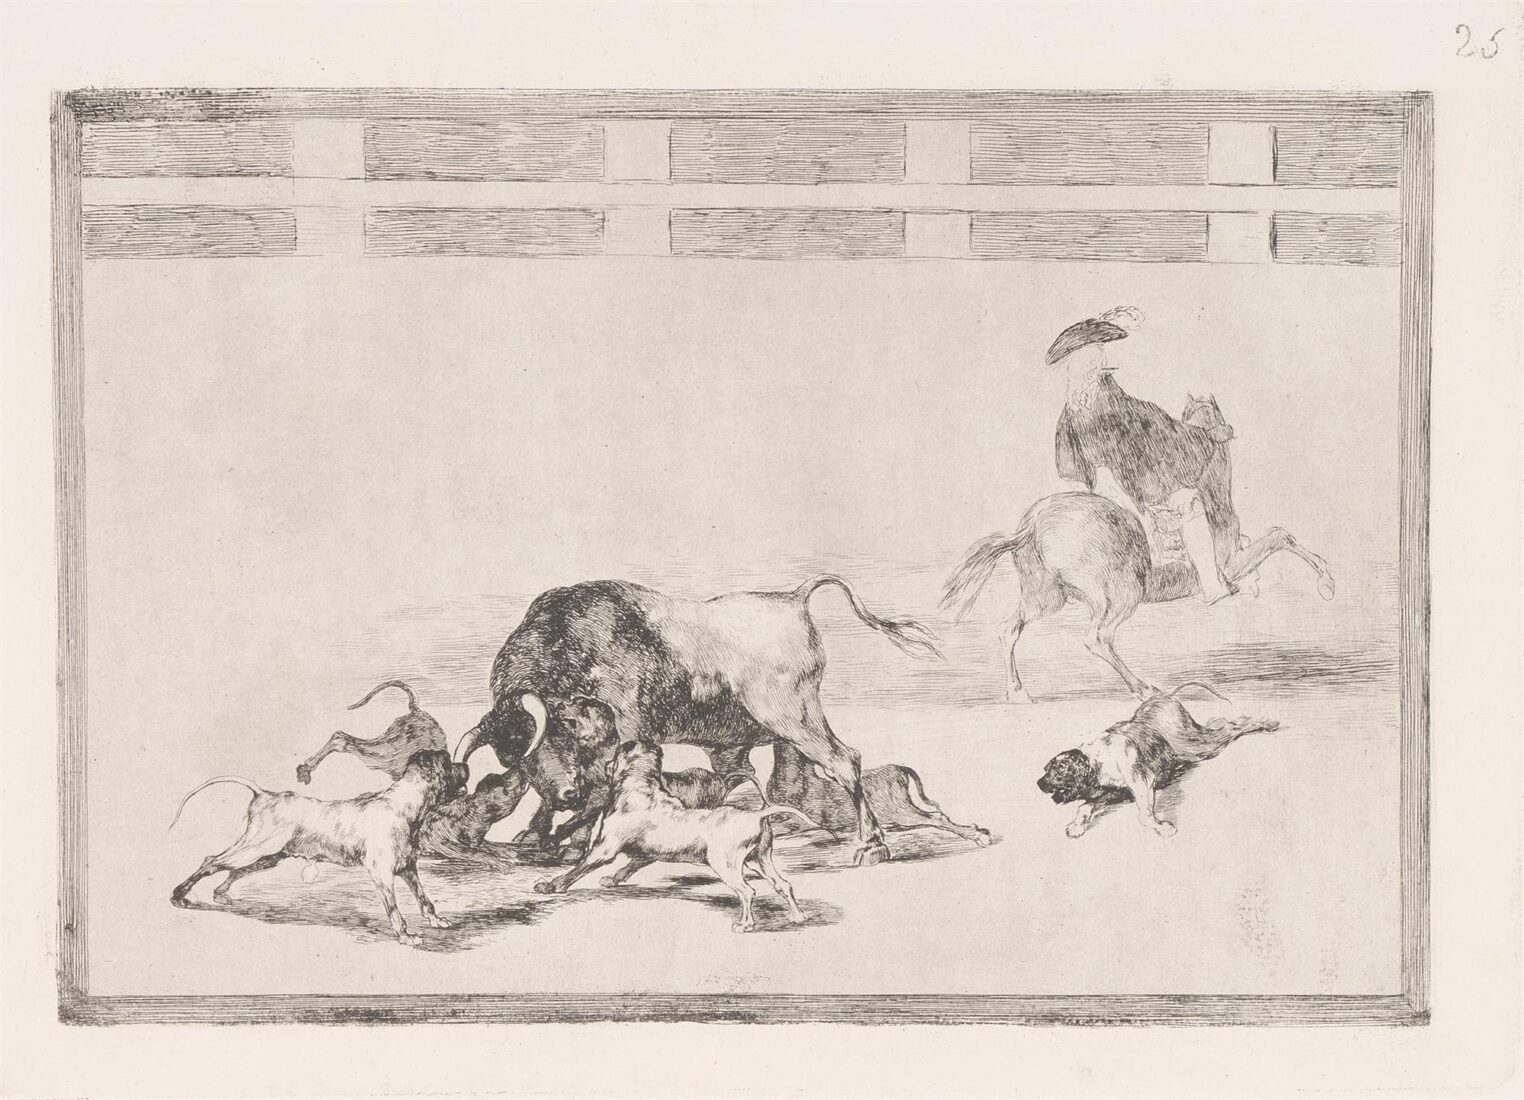 They loose dogs on the bull. (Echan perros al toro) - Goya y Lucientes Francisco